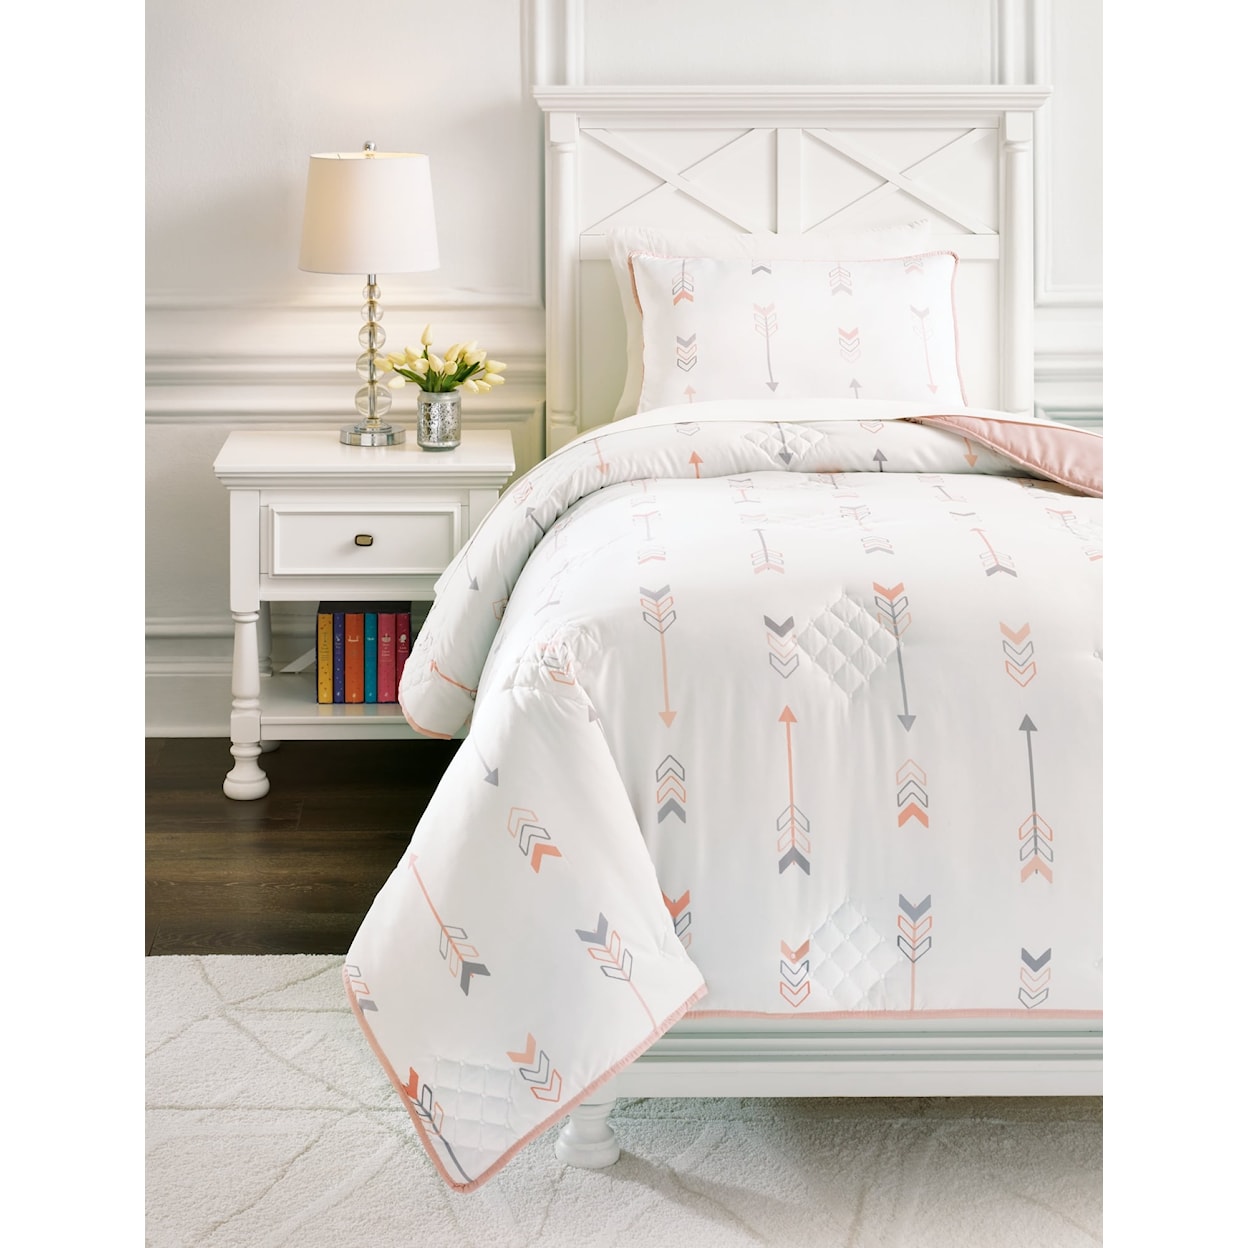 Ashley Furniture Signature Design Lexann Twin Comforter Set